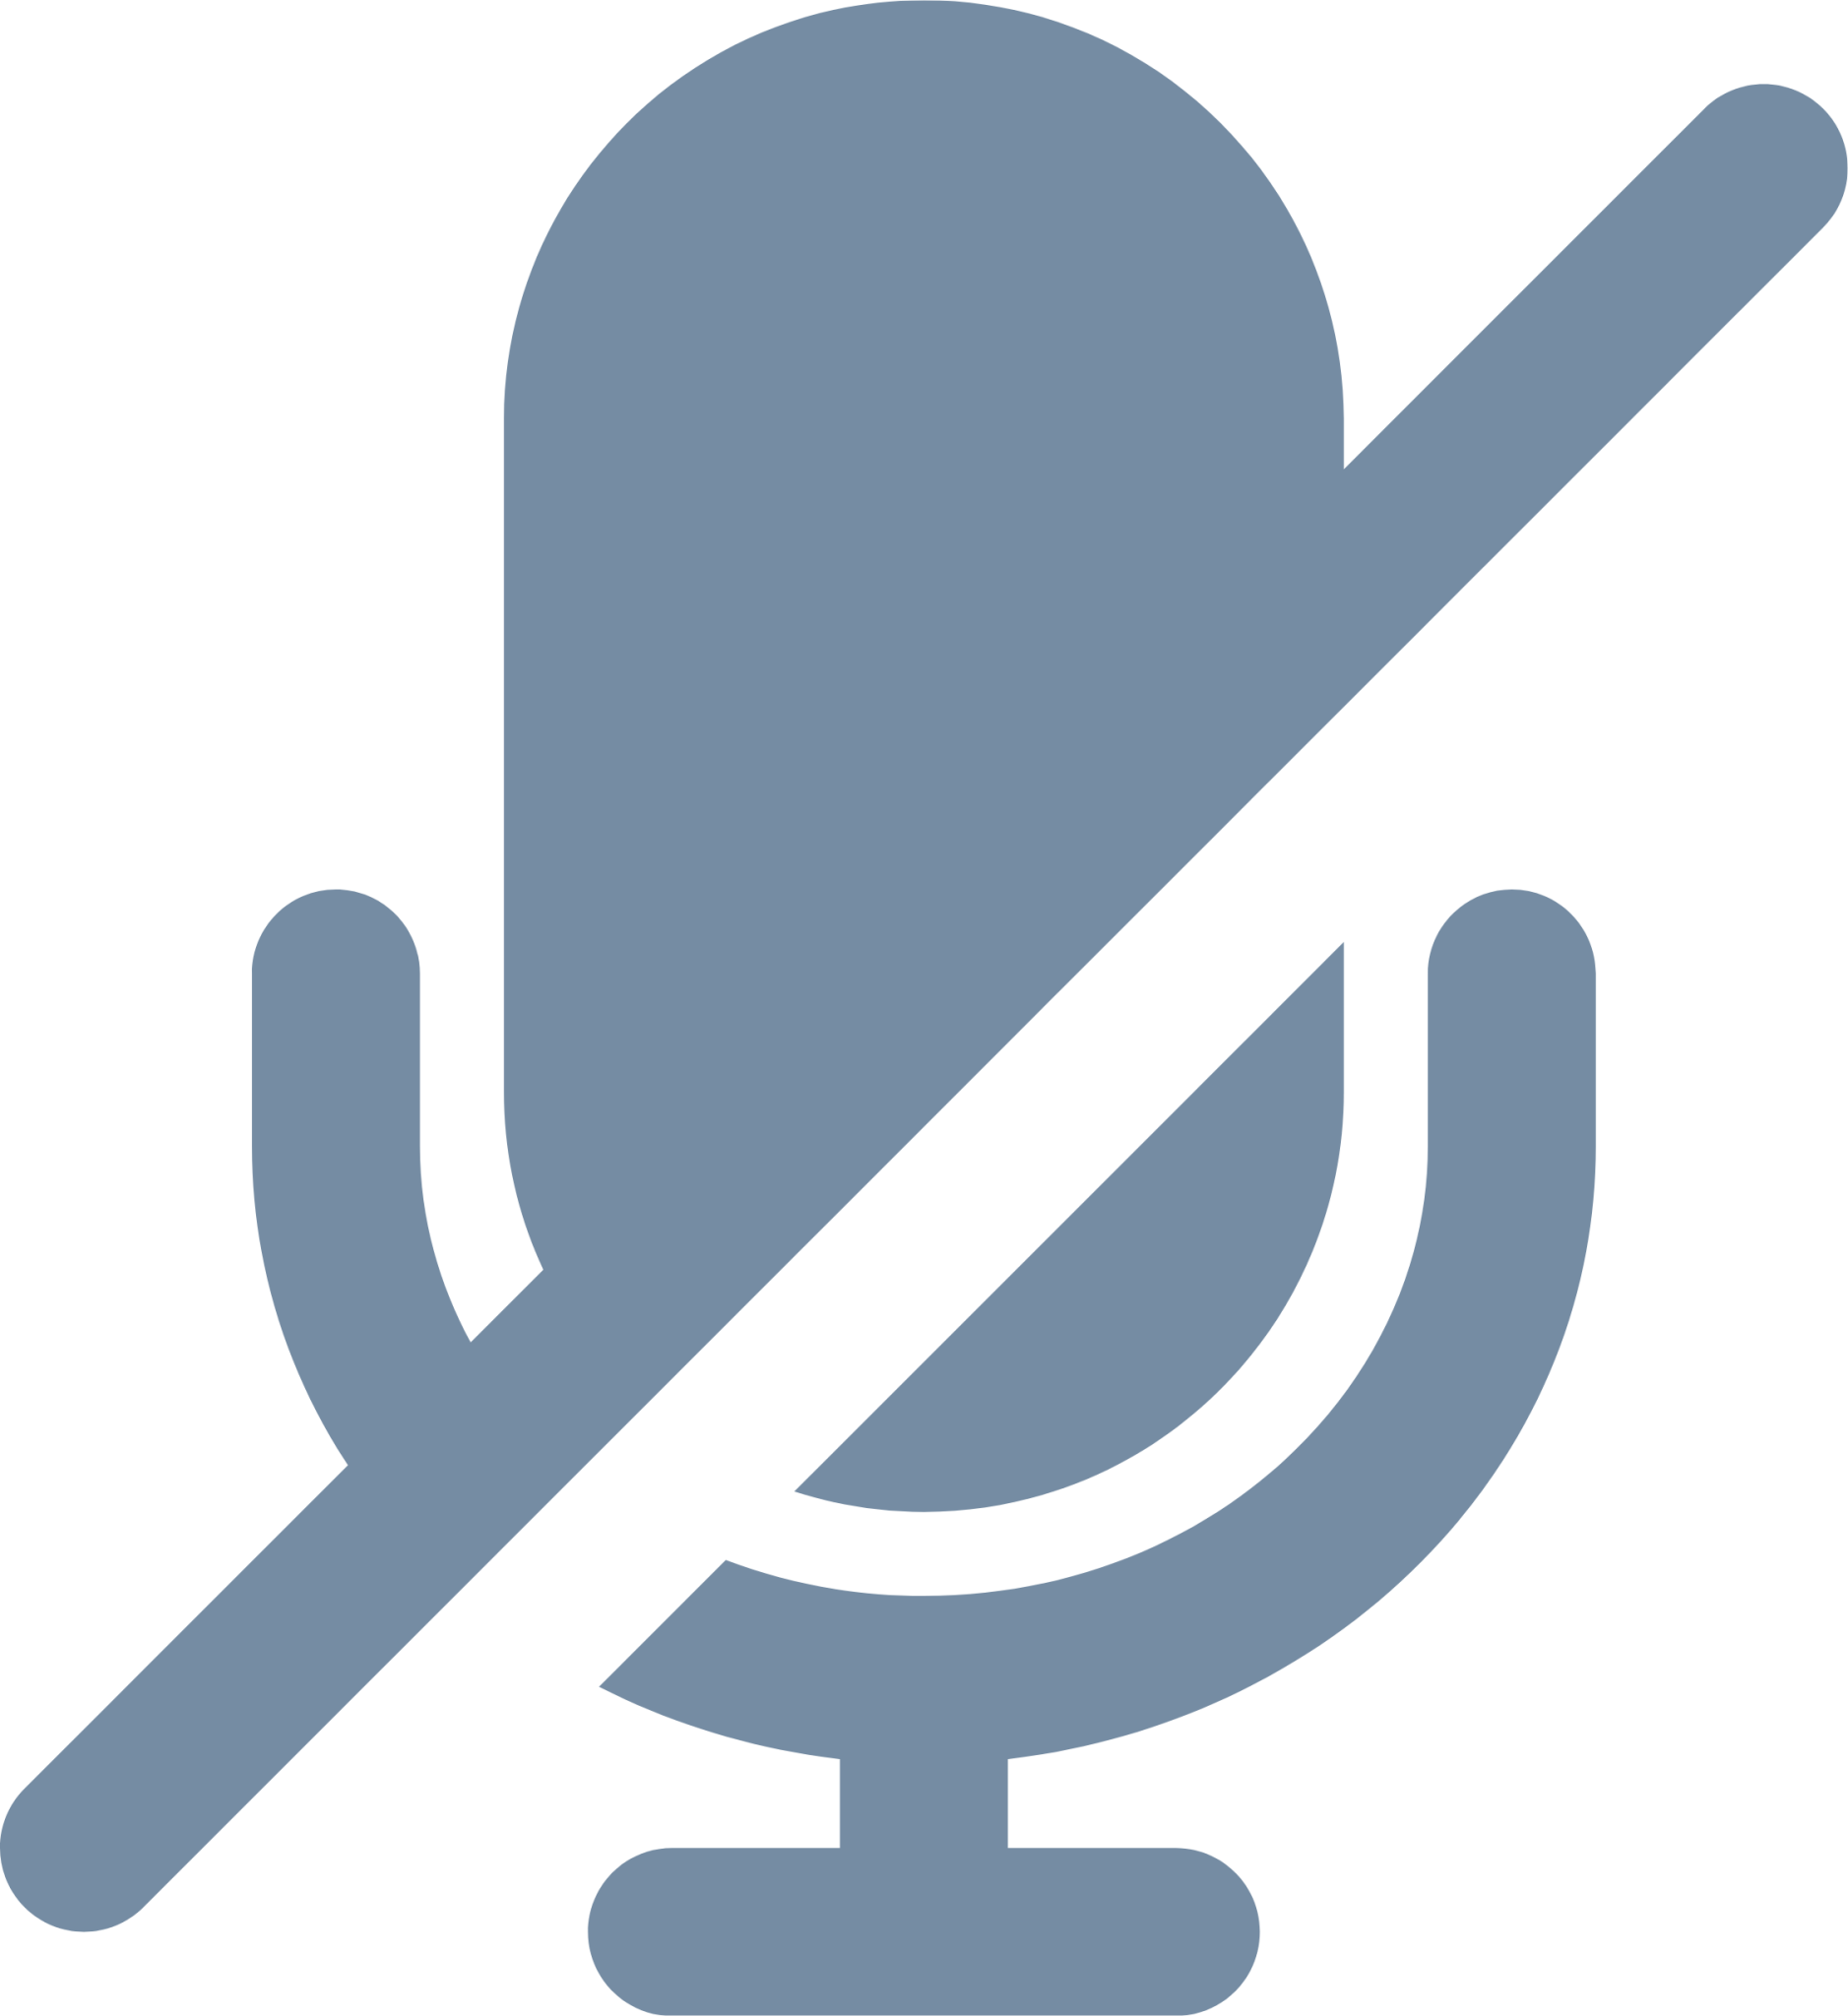 microphone slash icon